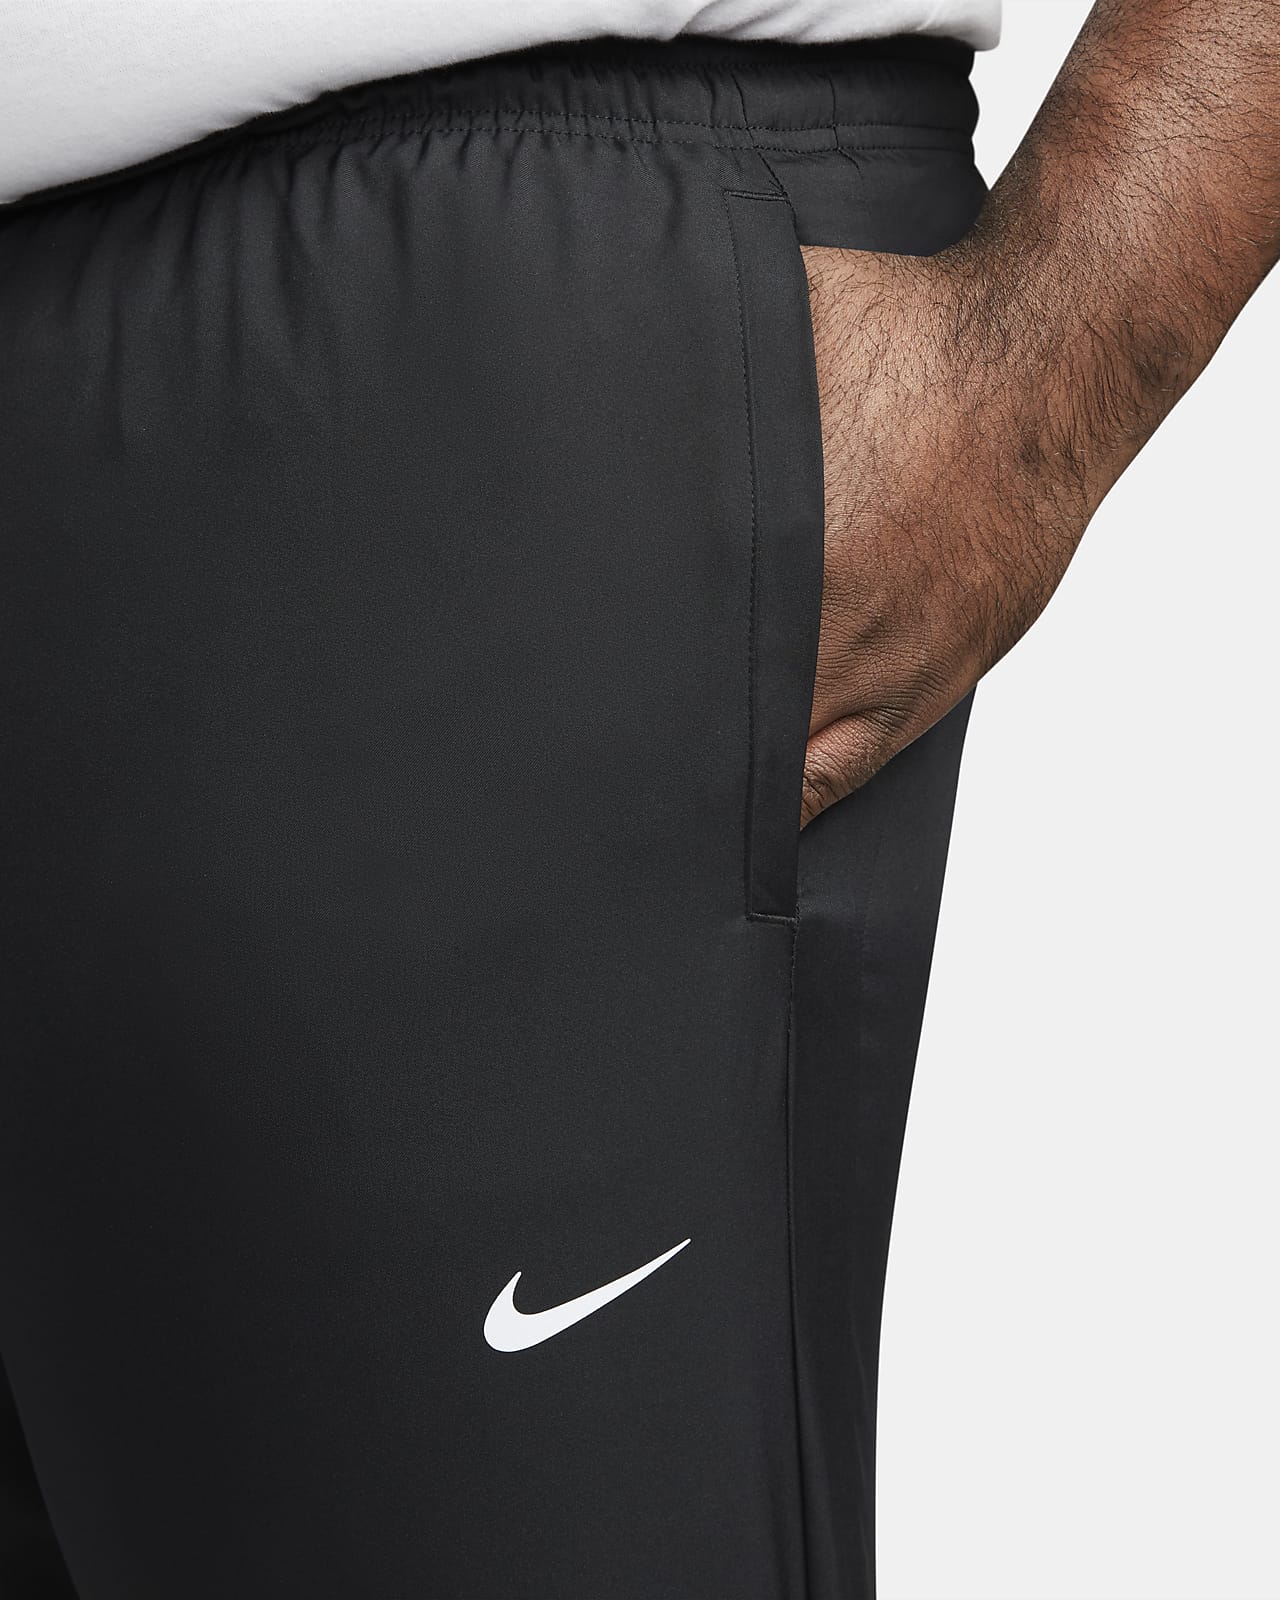 Nike Dri-FIT Challenger logo Sports Woven Running Long Pants Gray